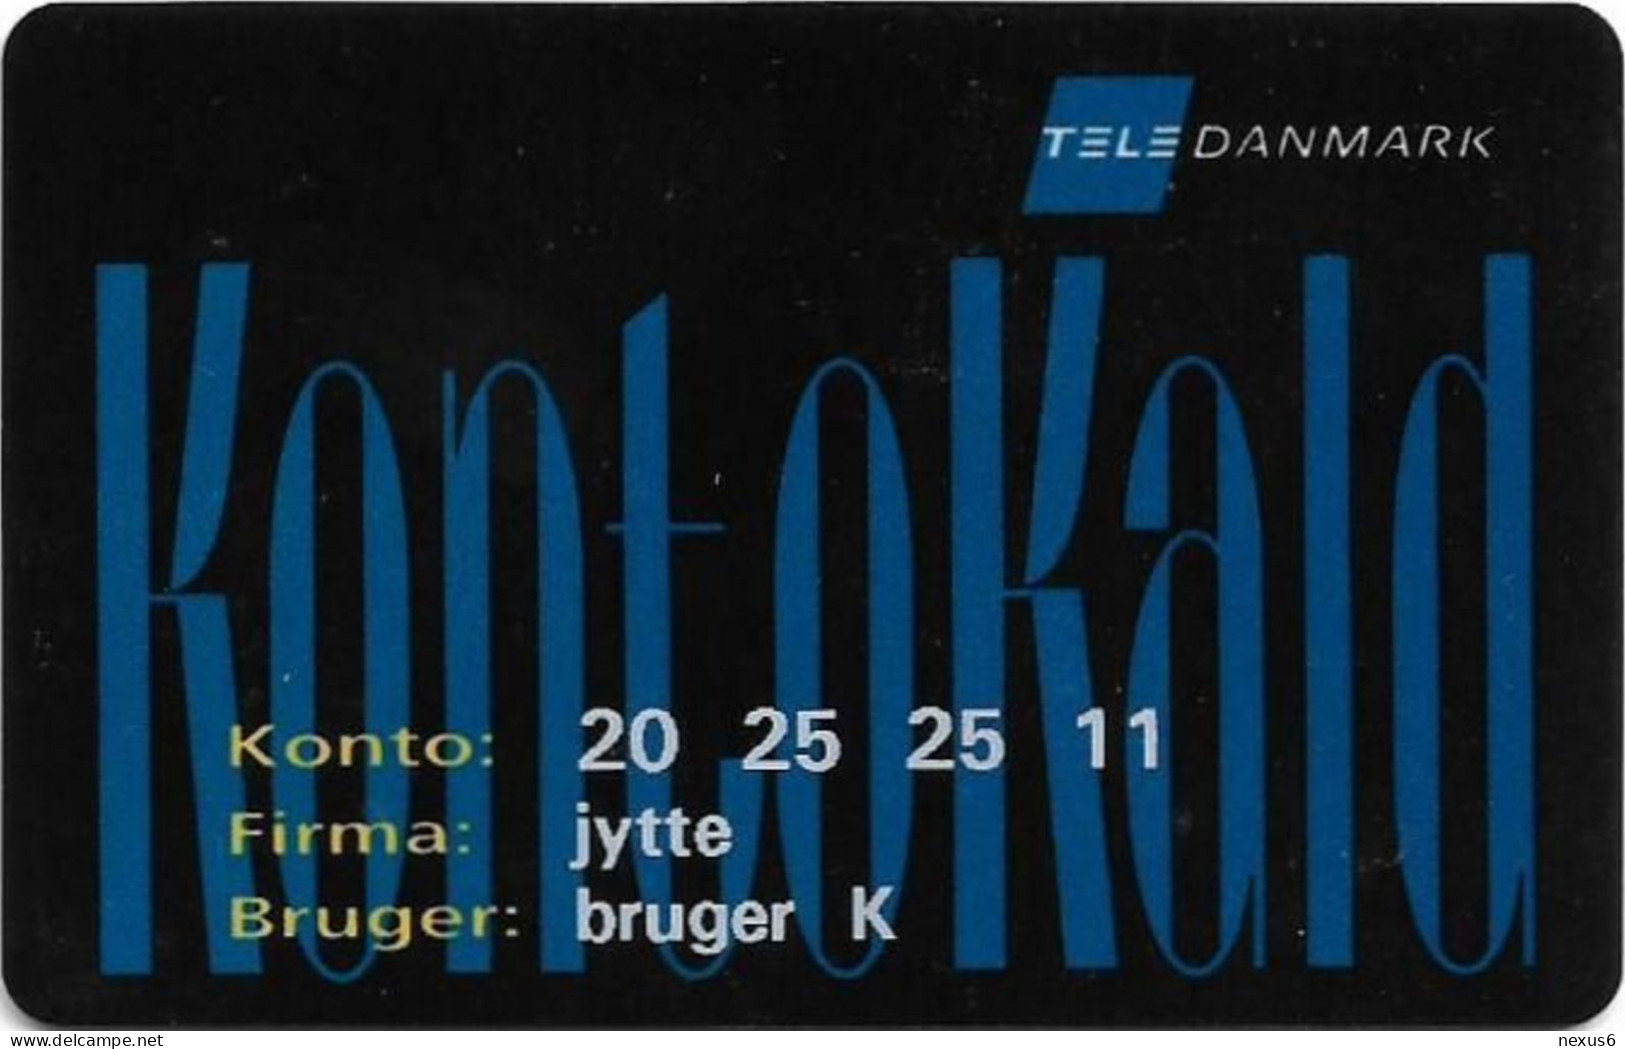 Denmark - Tele Danmark - KON-DEN-003 - Kontokald (Blue) Magnetic Creditcard, Used - Danemark